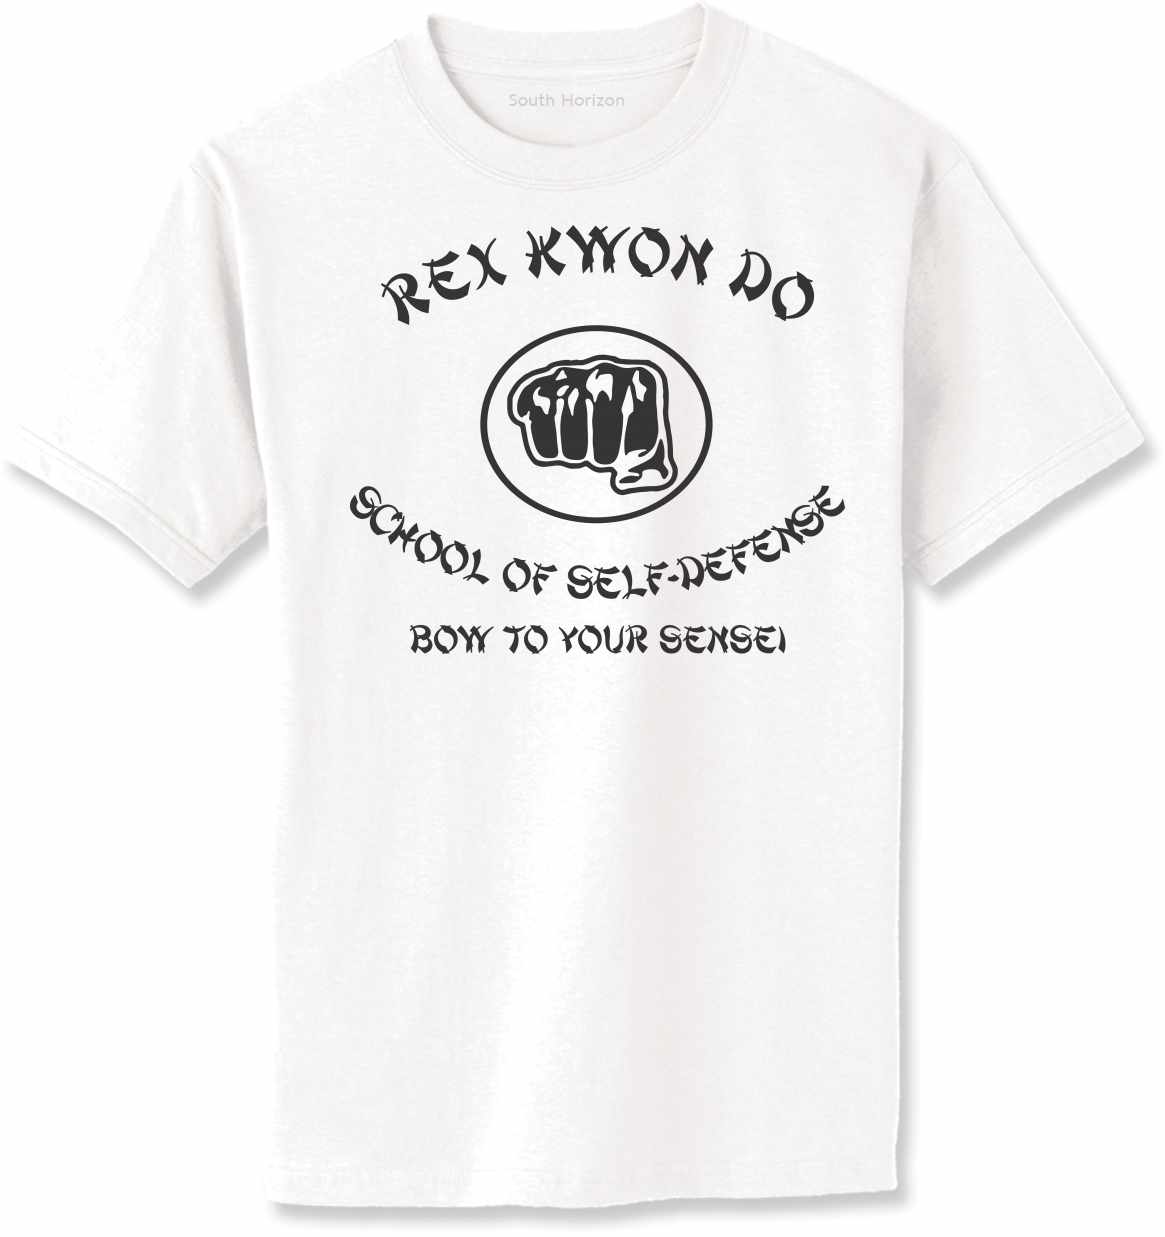 REX KWON DO SCHOOL OF SELF DEFENSE Adult T-Shirt